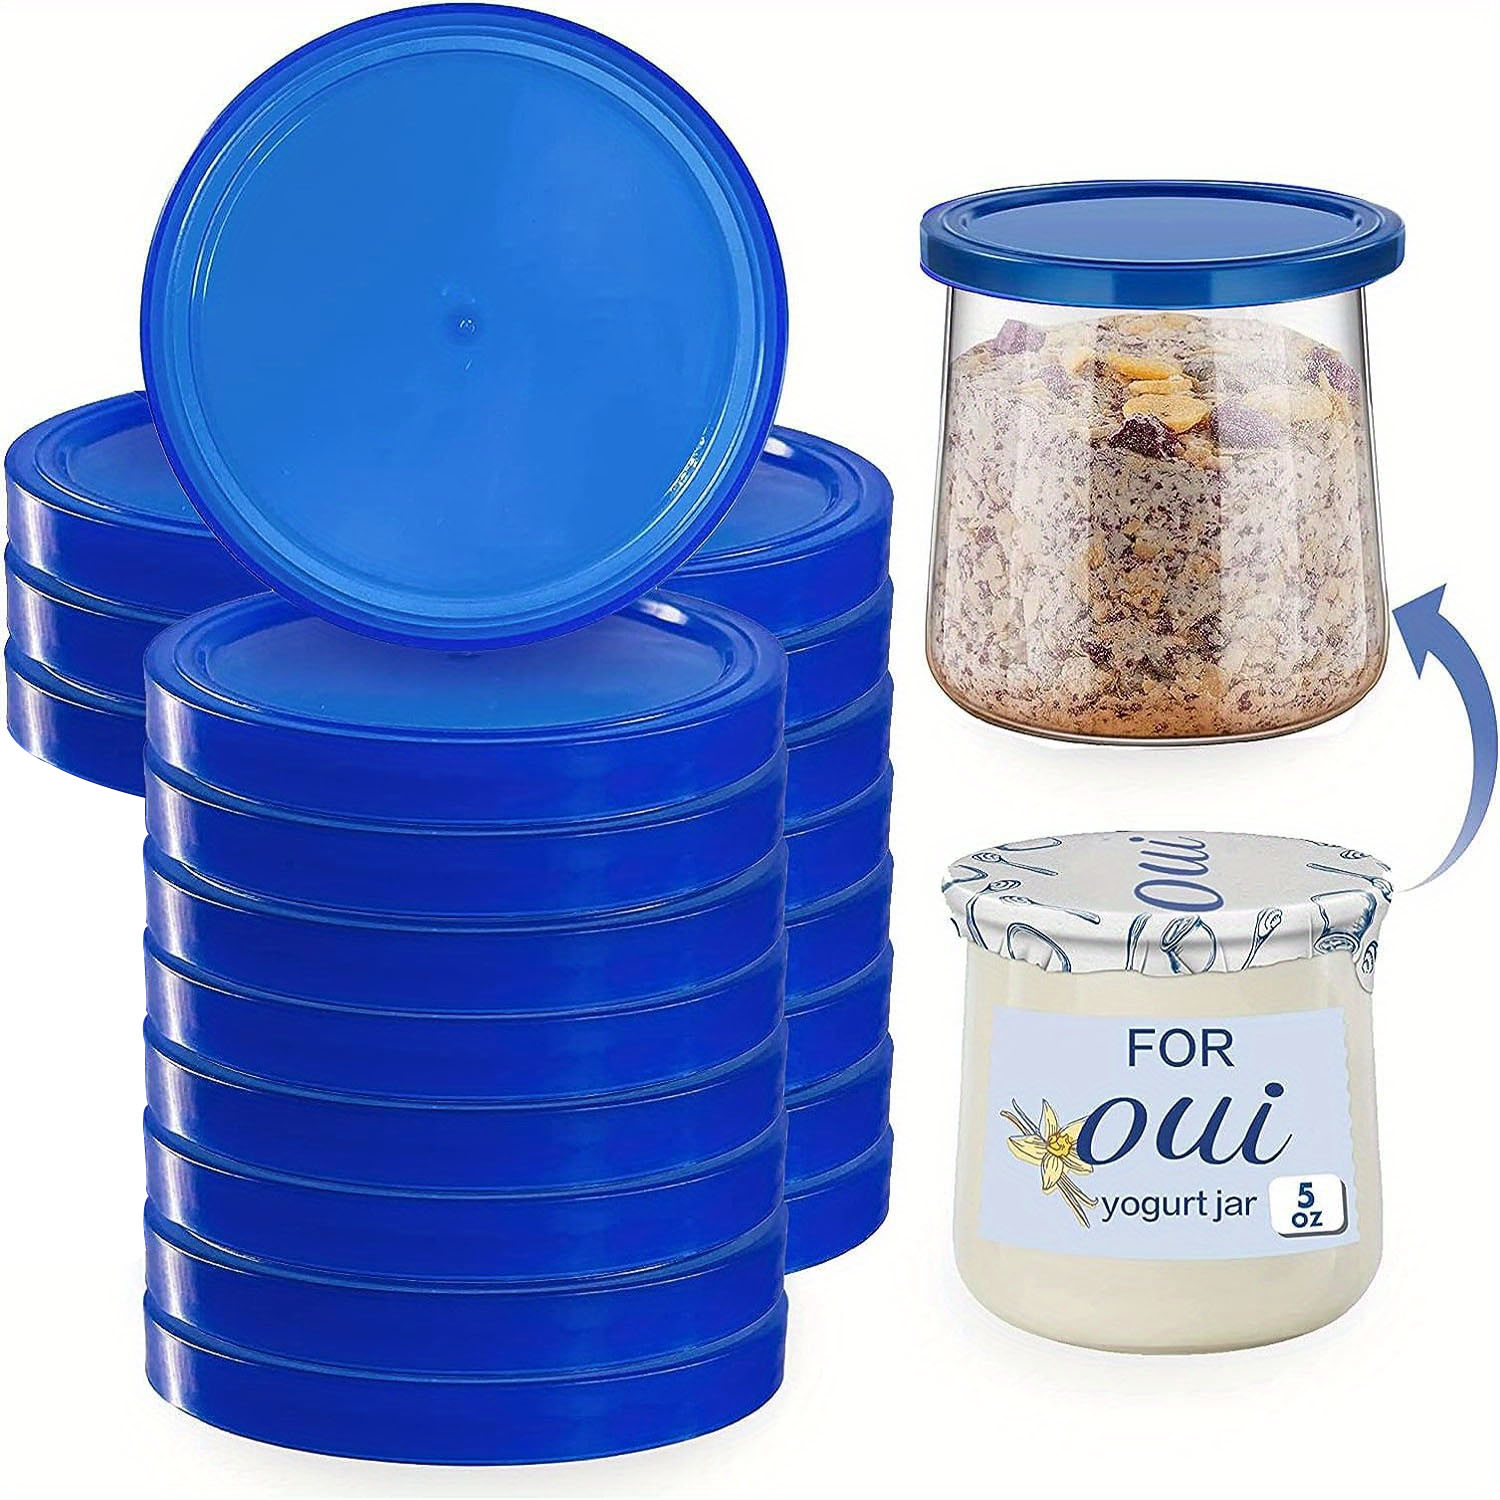 20 Pcs 4 oz Glass Jars with Lids - Yogurt Container - Yoghurt Jars